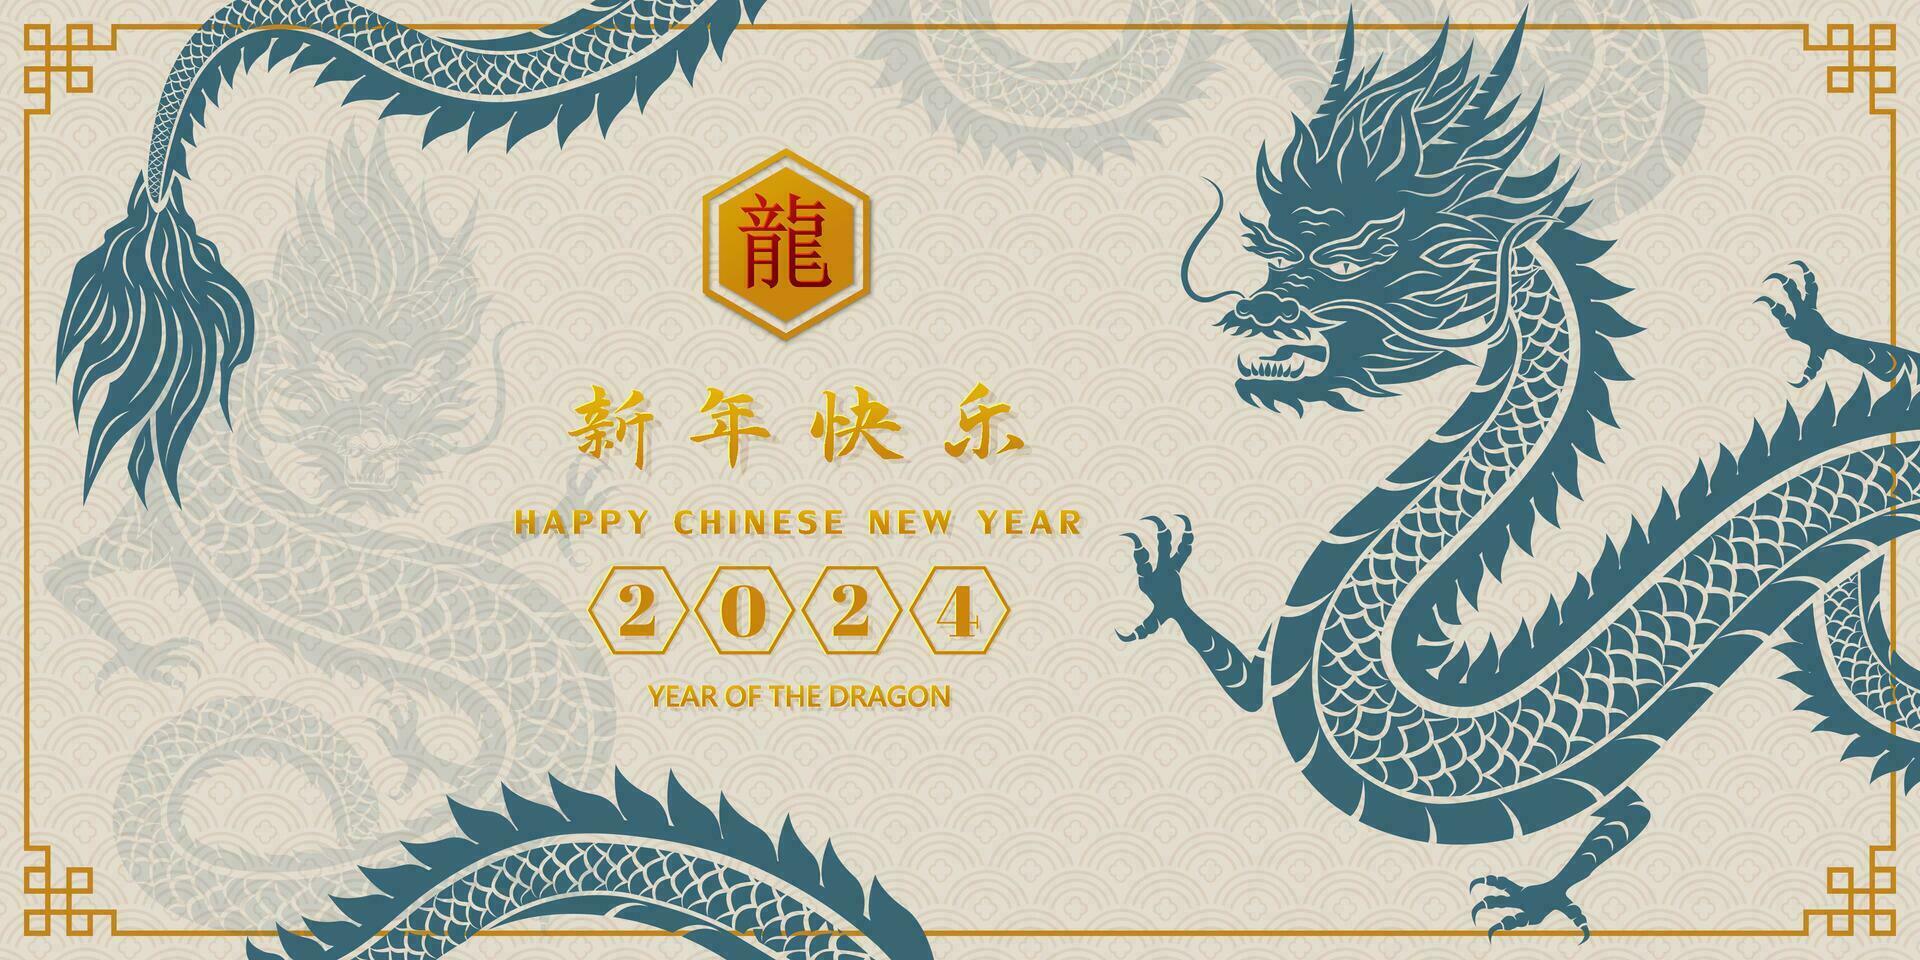 contento chino nuevo año 2024,celebrar tema con continuar zodíaco firmar en chino fondo, chino traducir media contento nuevo año 2024, dragón año vector